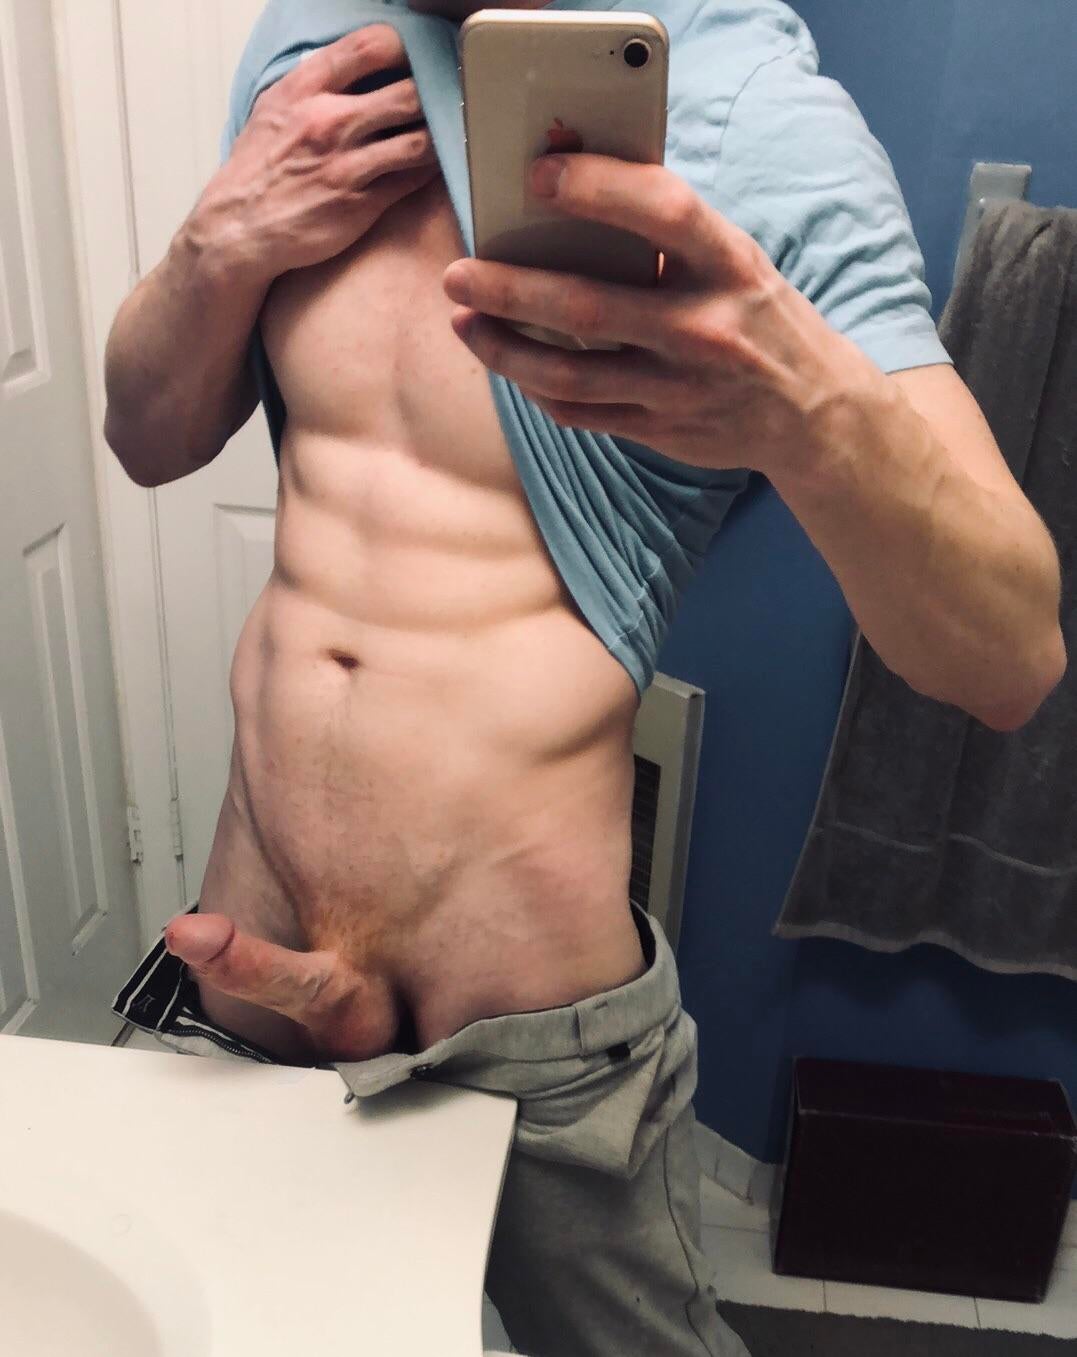 A selfie with my dick in my boyfriend's bathroom